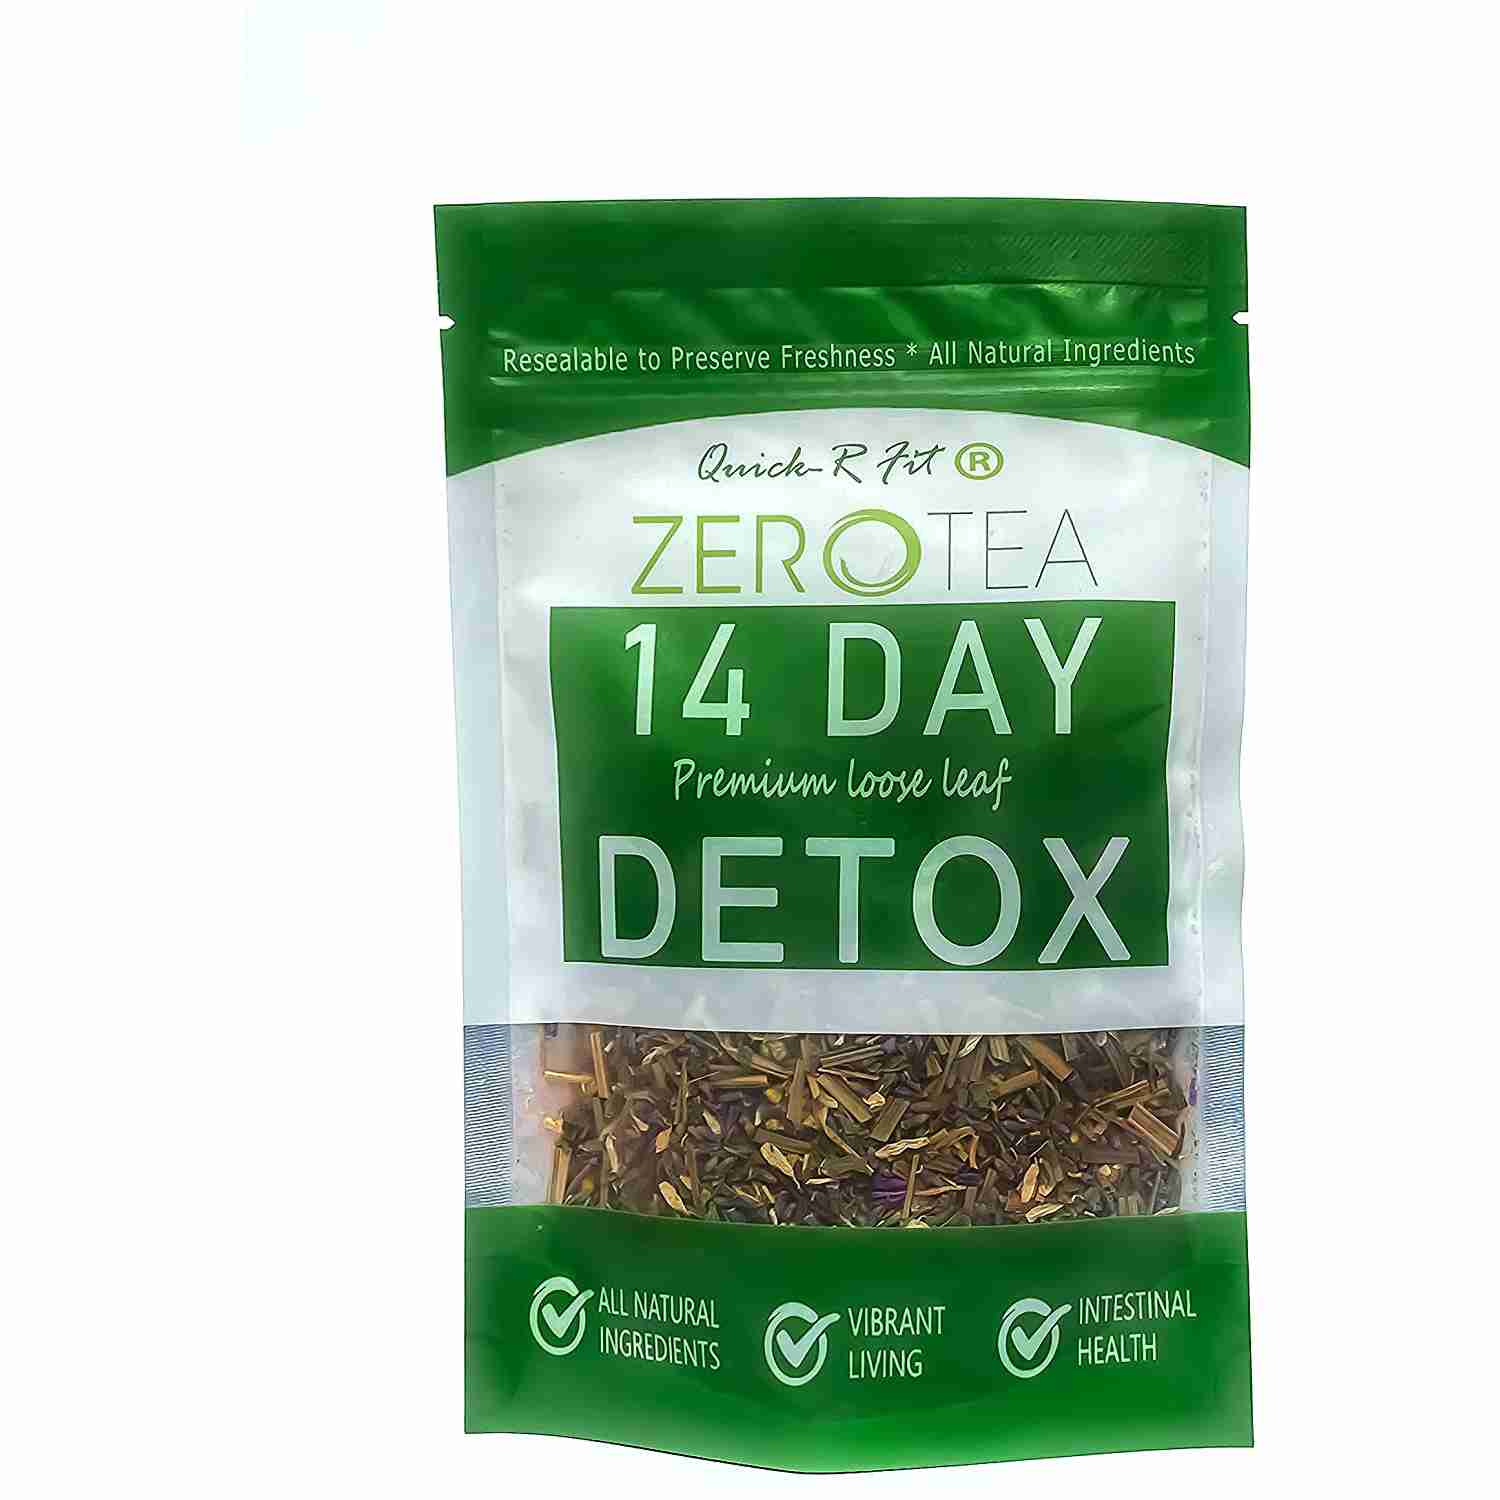 detox-weight-loss-cleanse-colon-fat-burner-tea-teatox with cash back rebate